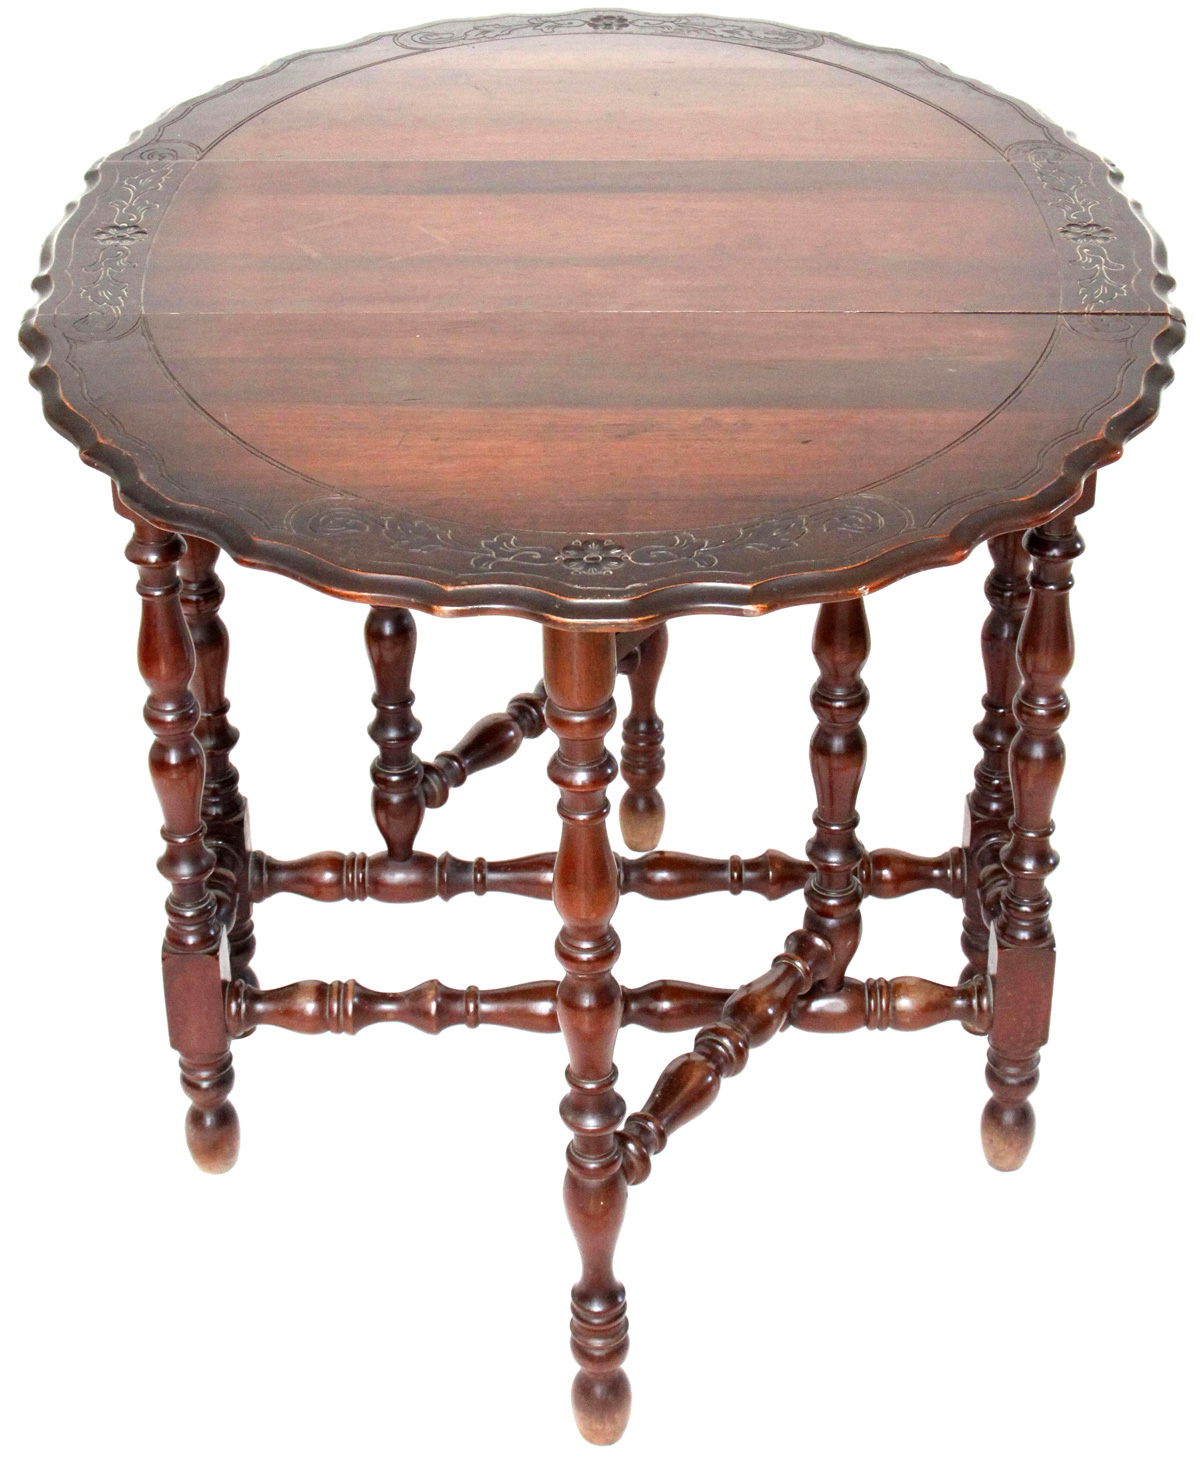 Antique Victorian gate-leg table - שולחן מתקפל - ויקטוריאני עתיק - Back To List of Antique English Furniture